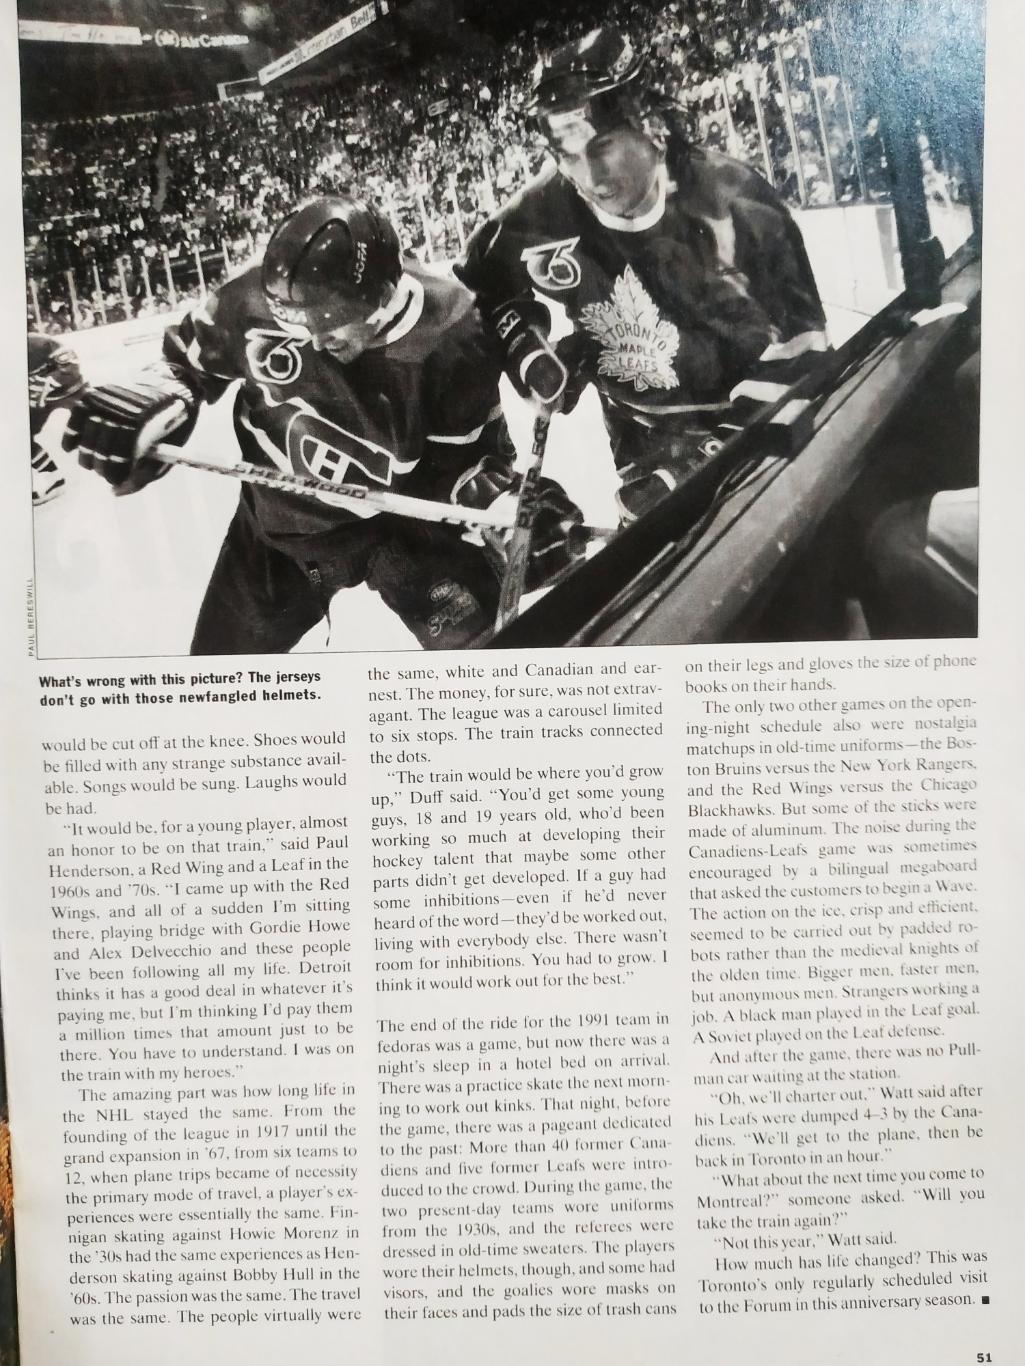 ХОККЕЙ ЕЖЕНЕДЕЛЬНИК СПОРТ ИЛЛЮСТРЕЙТЕД НХЛ 14 OCT 1991 NHL SPORTS ILLUSTRATED 3